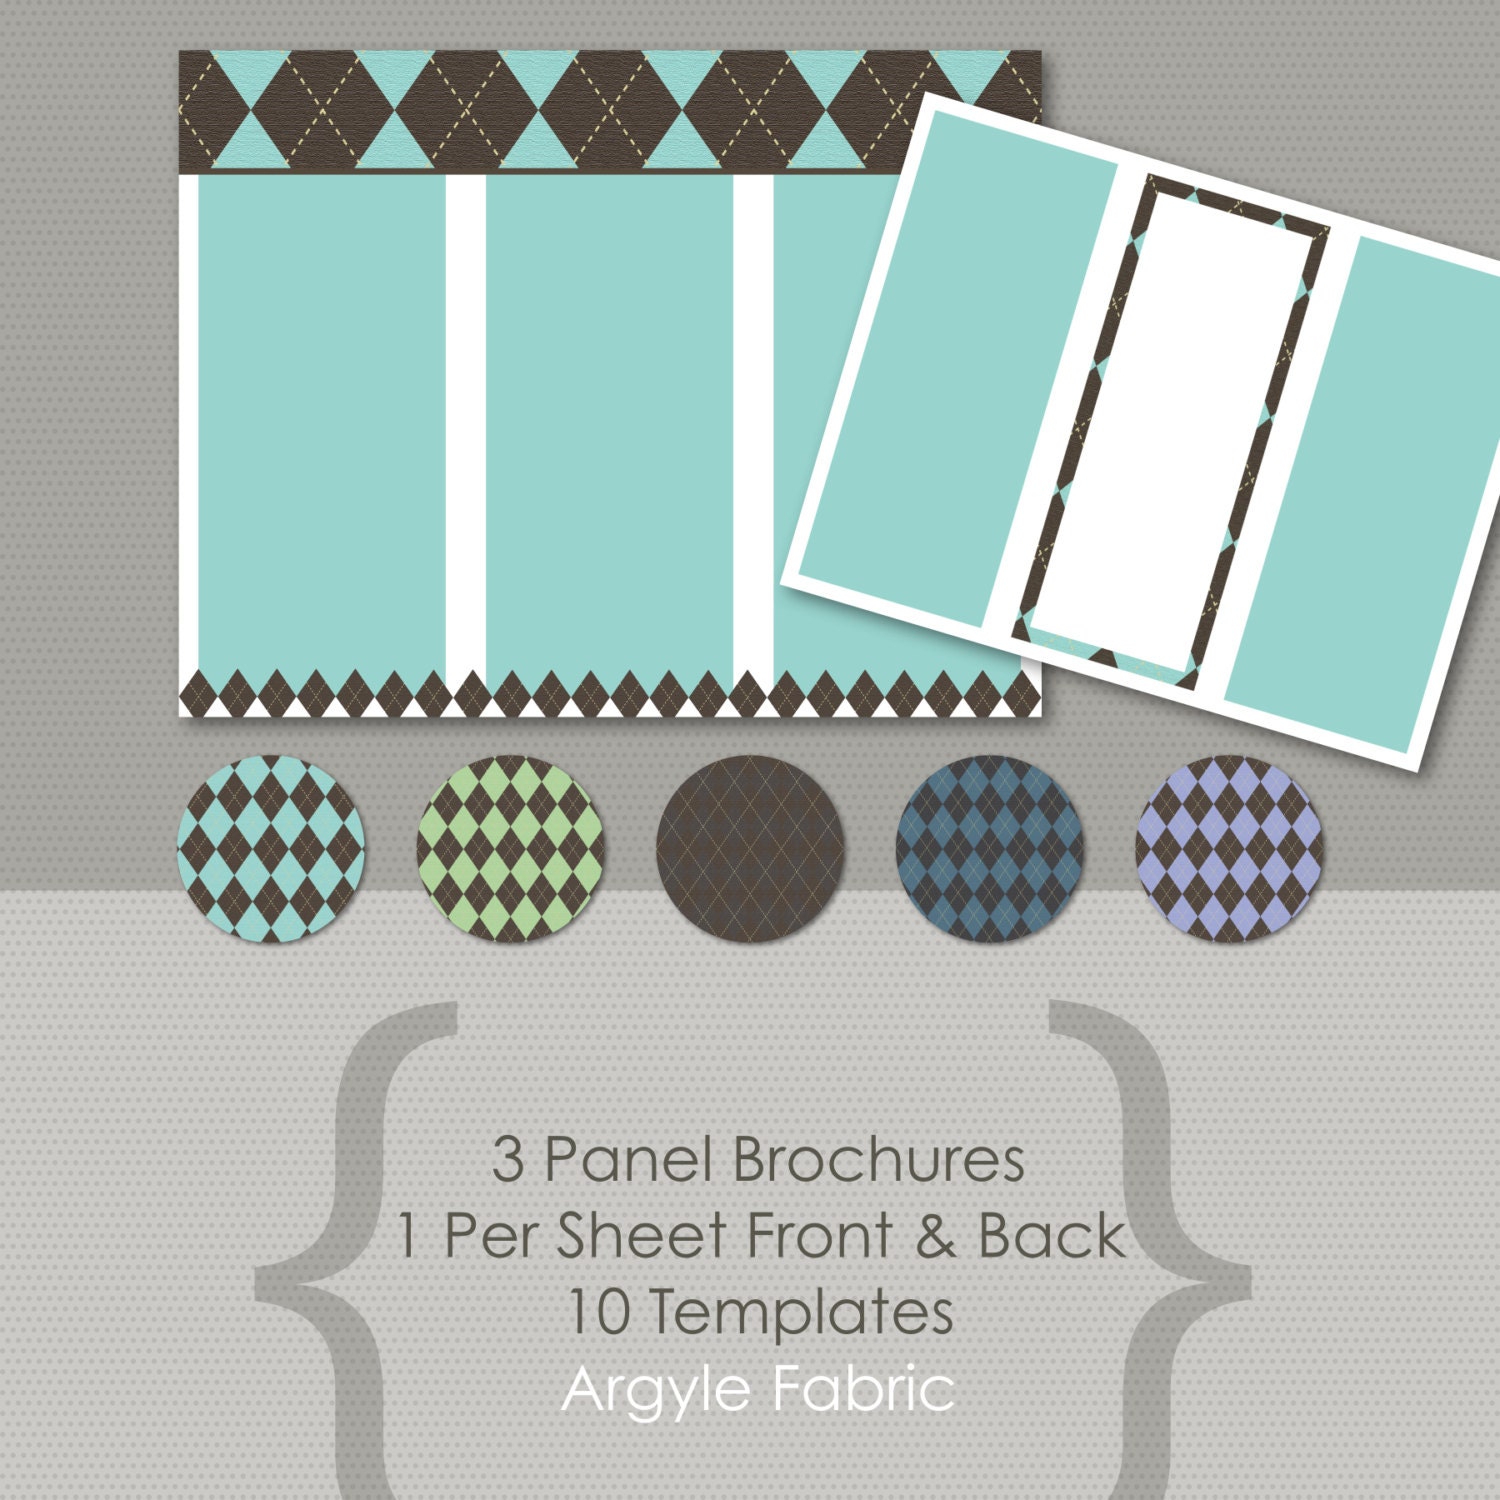 Argyle Fabric 3 Panel Brochure Templates Print At Home